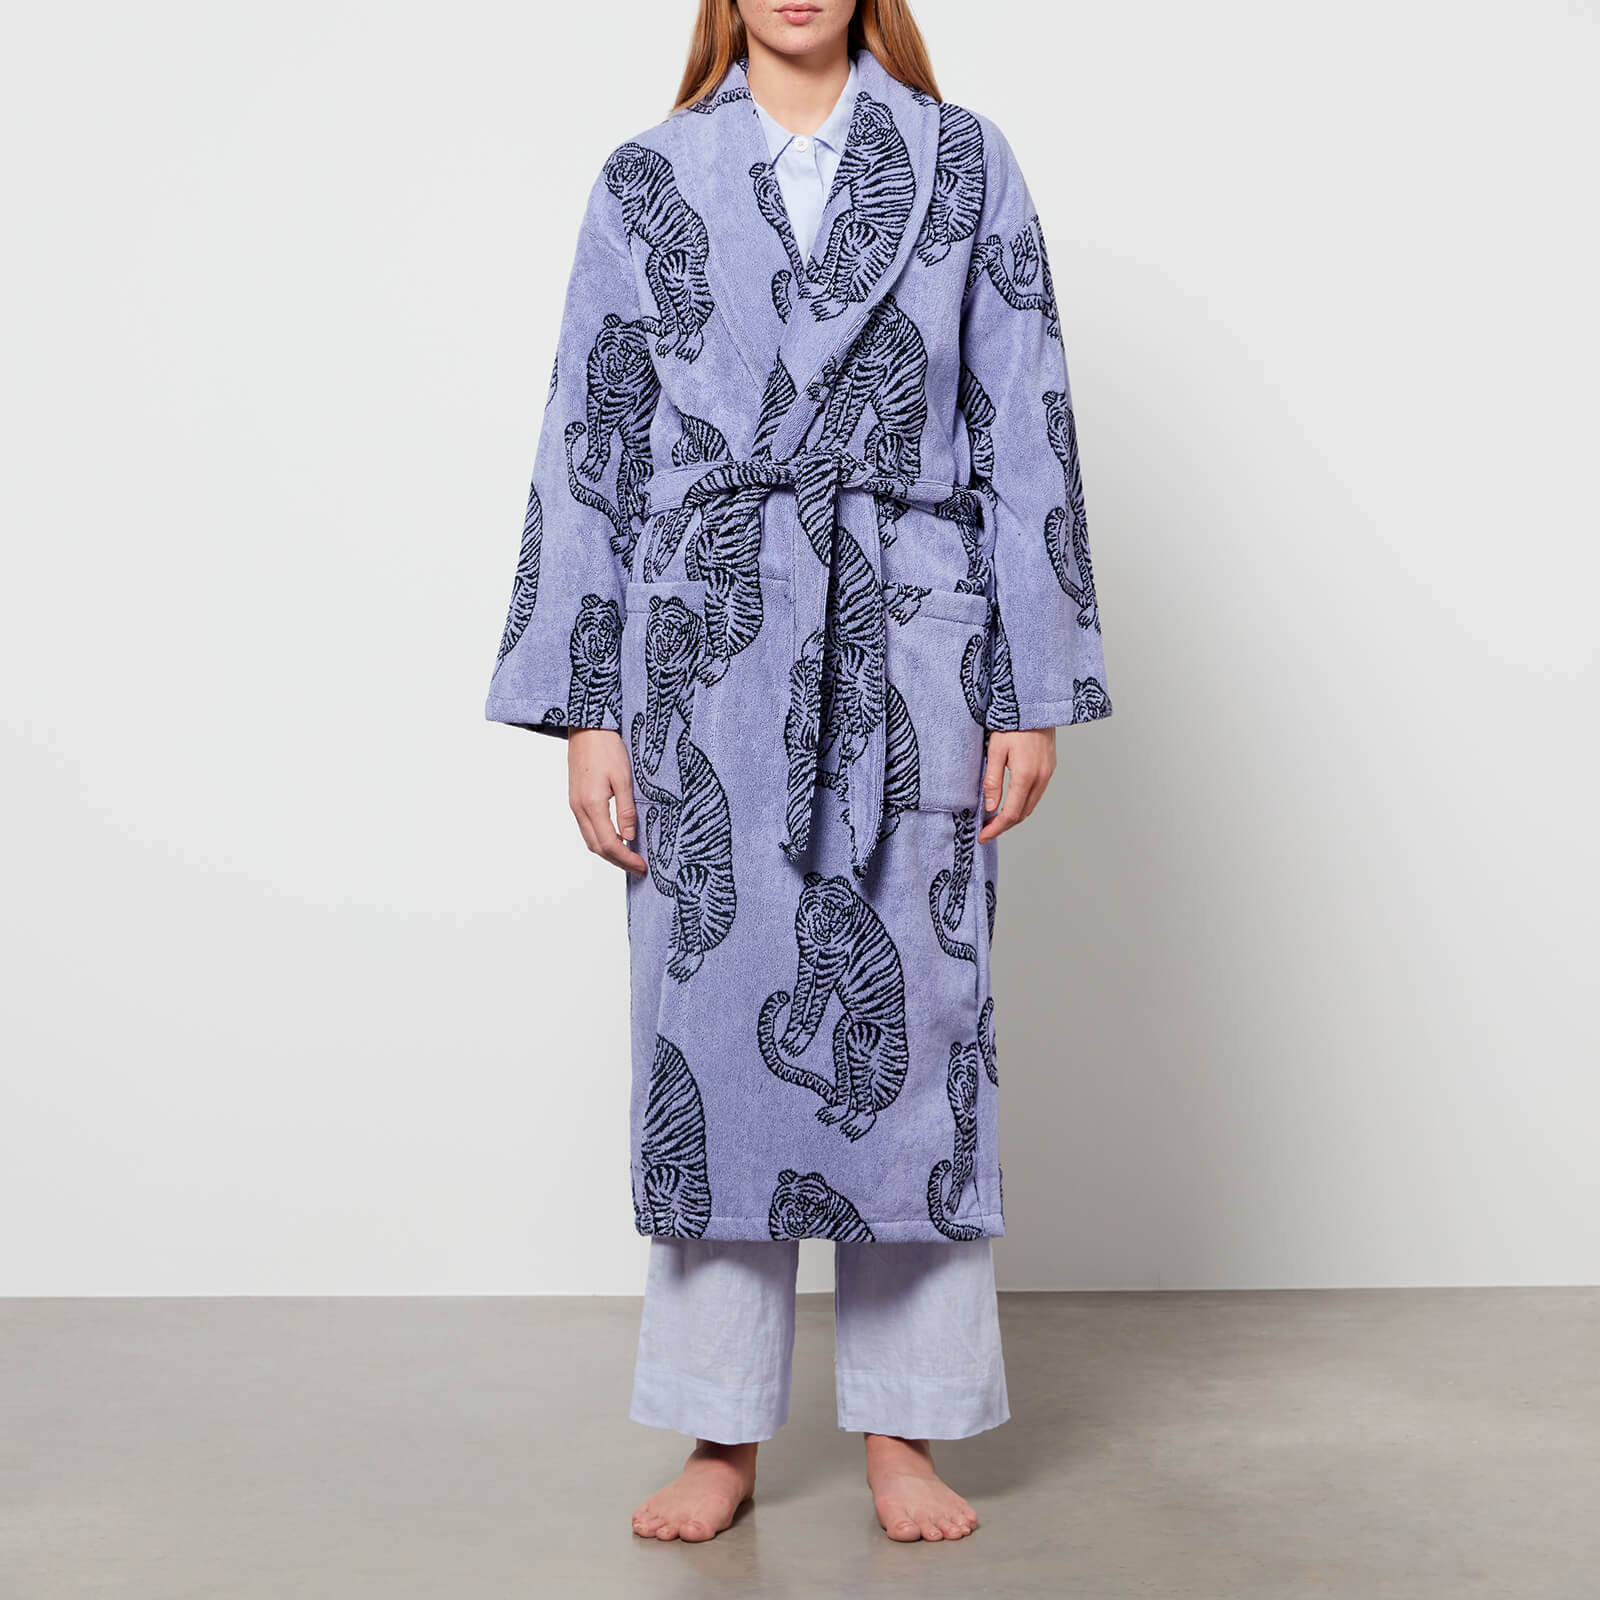 Desmond & Dempsey Women's Towel Robe Tiger - Lavender - S